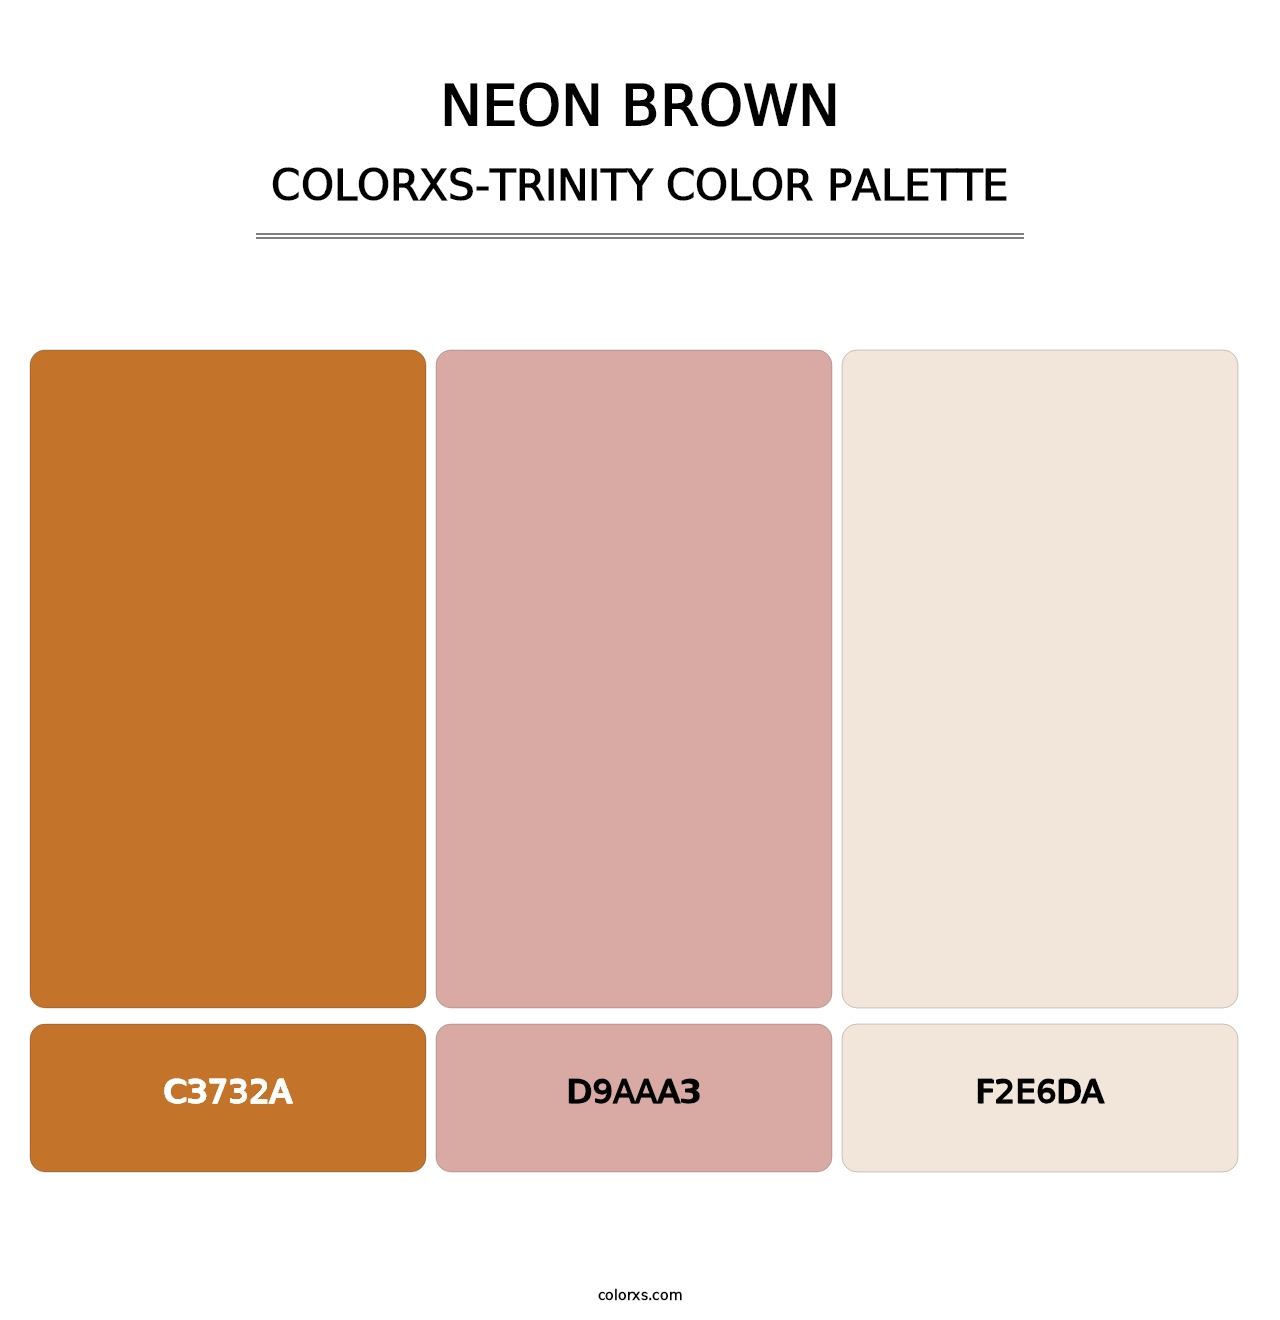 Neon Brown - Colorxs Trinity Palette